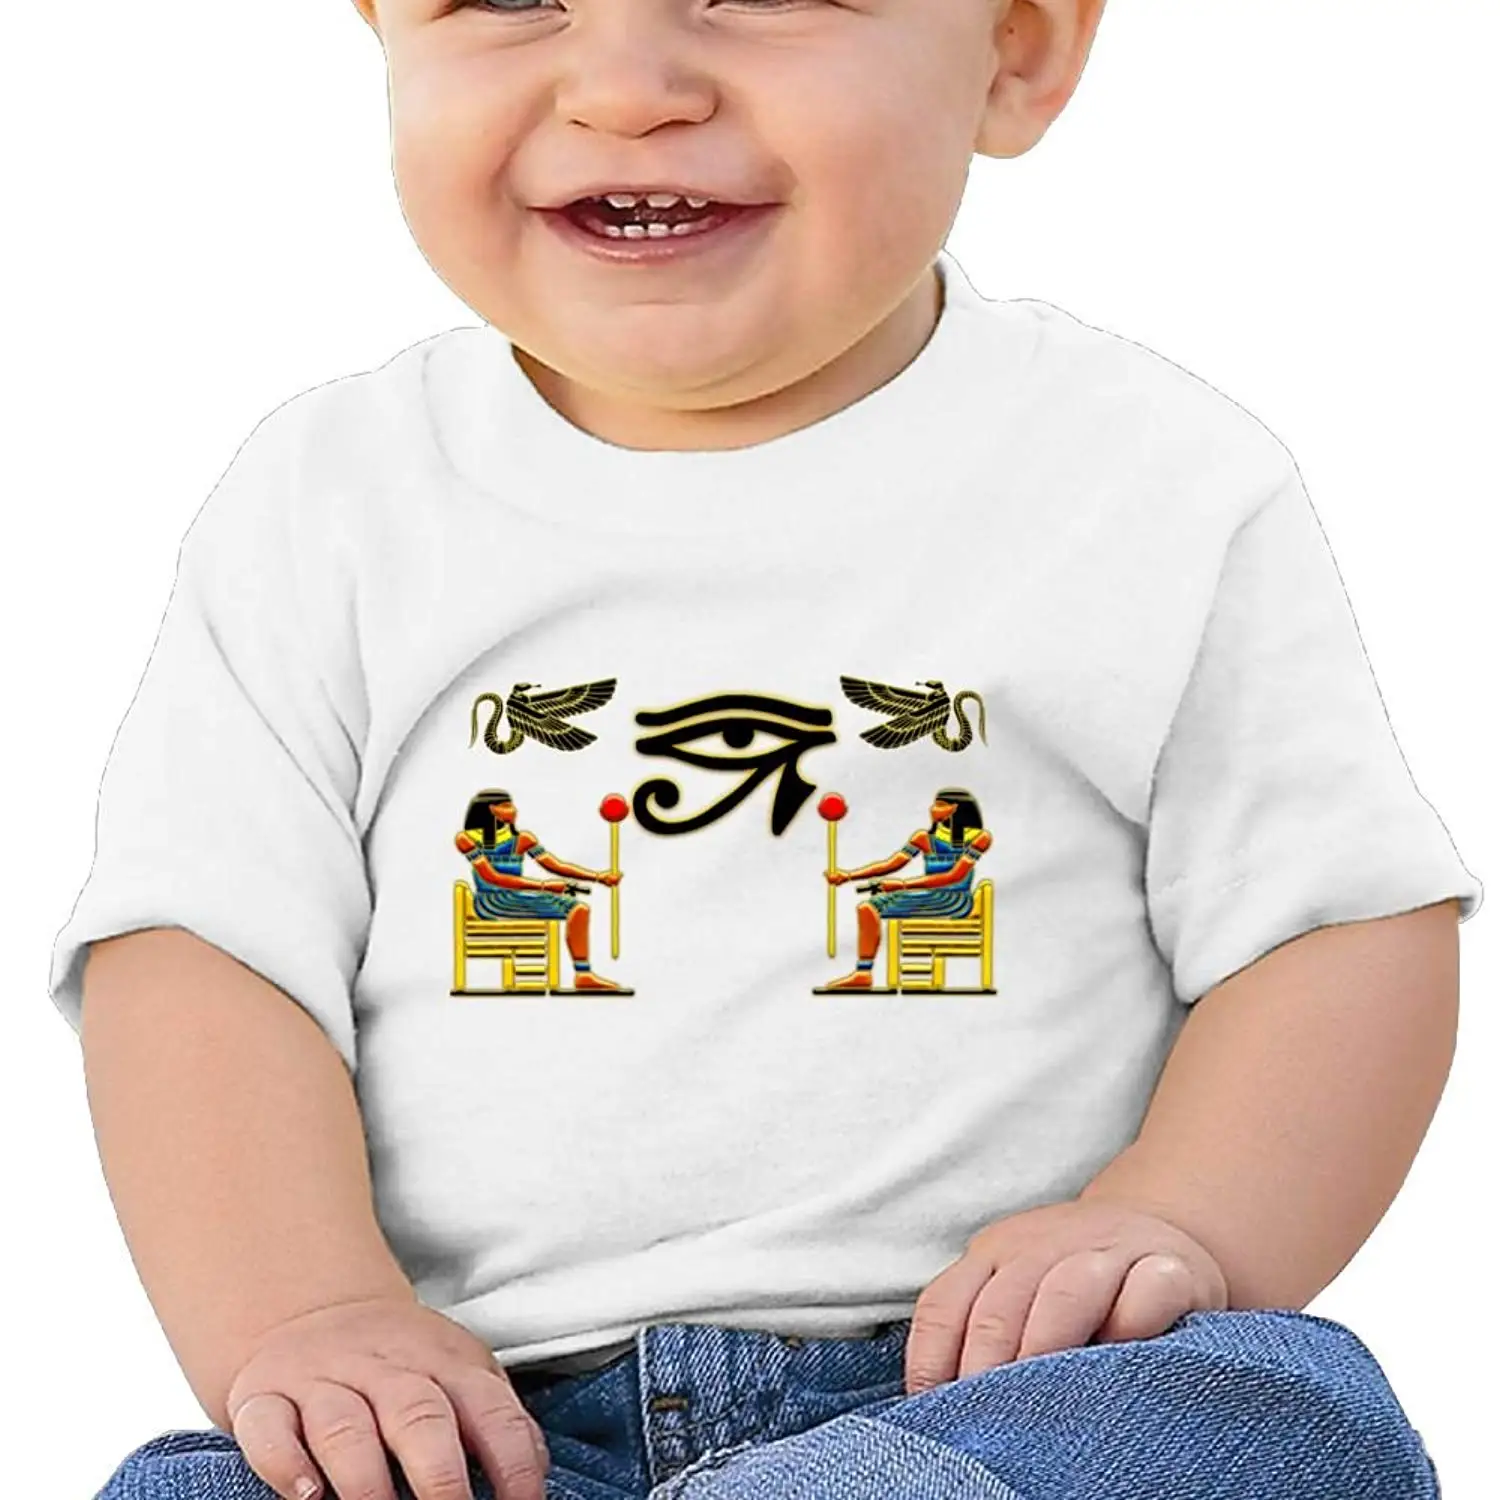 Kangtians Baby Nightwish Shirts Tee Toddler Cotton Shirt